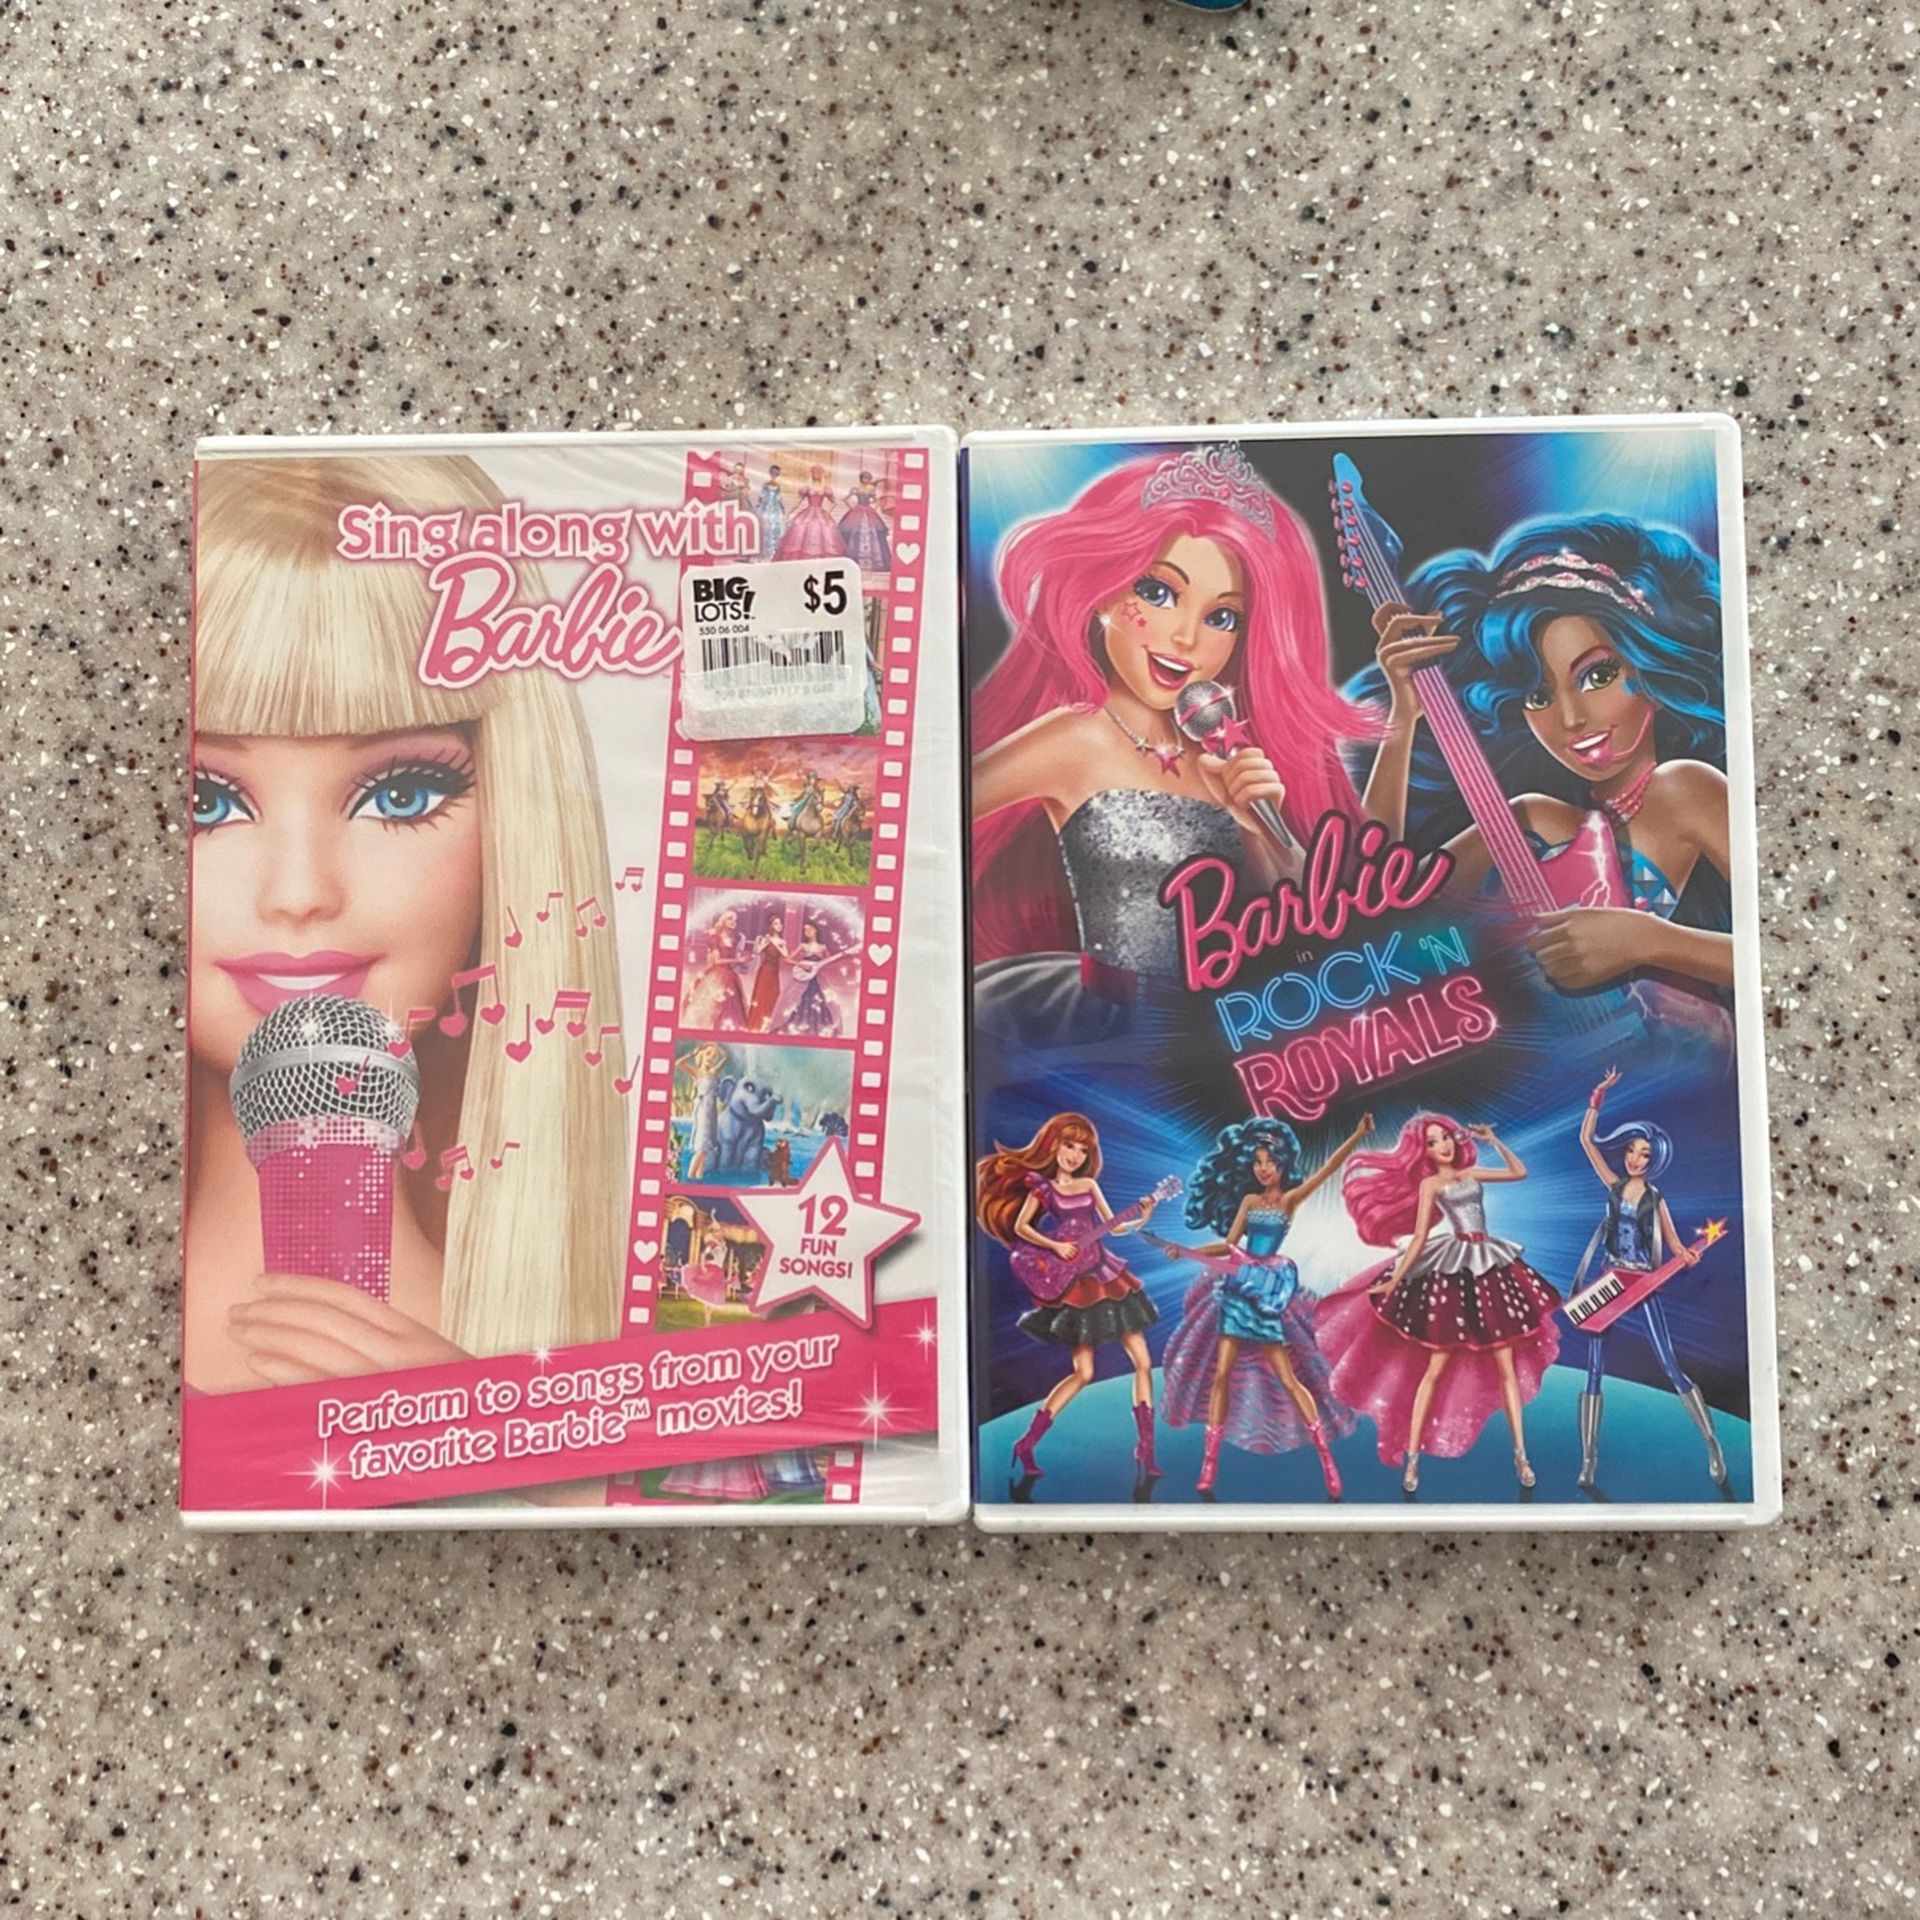 2 Barbie DVDs Sing Along